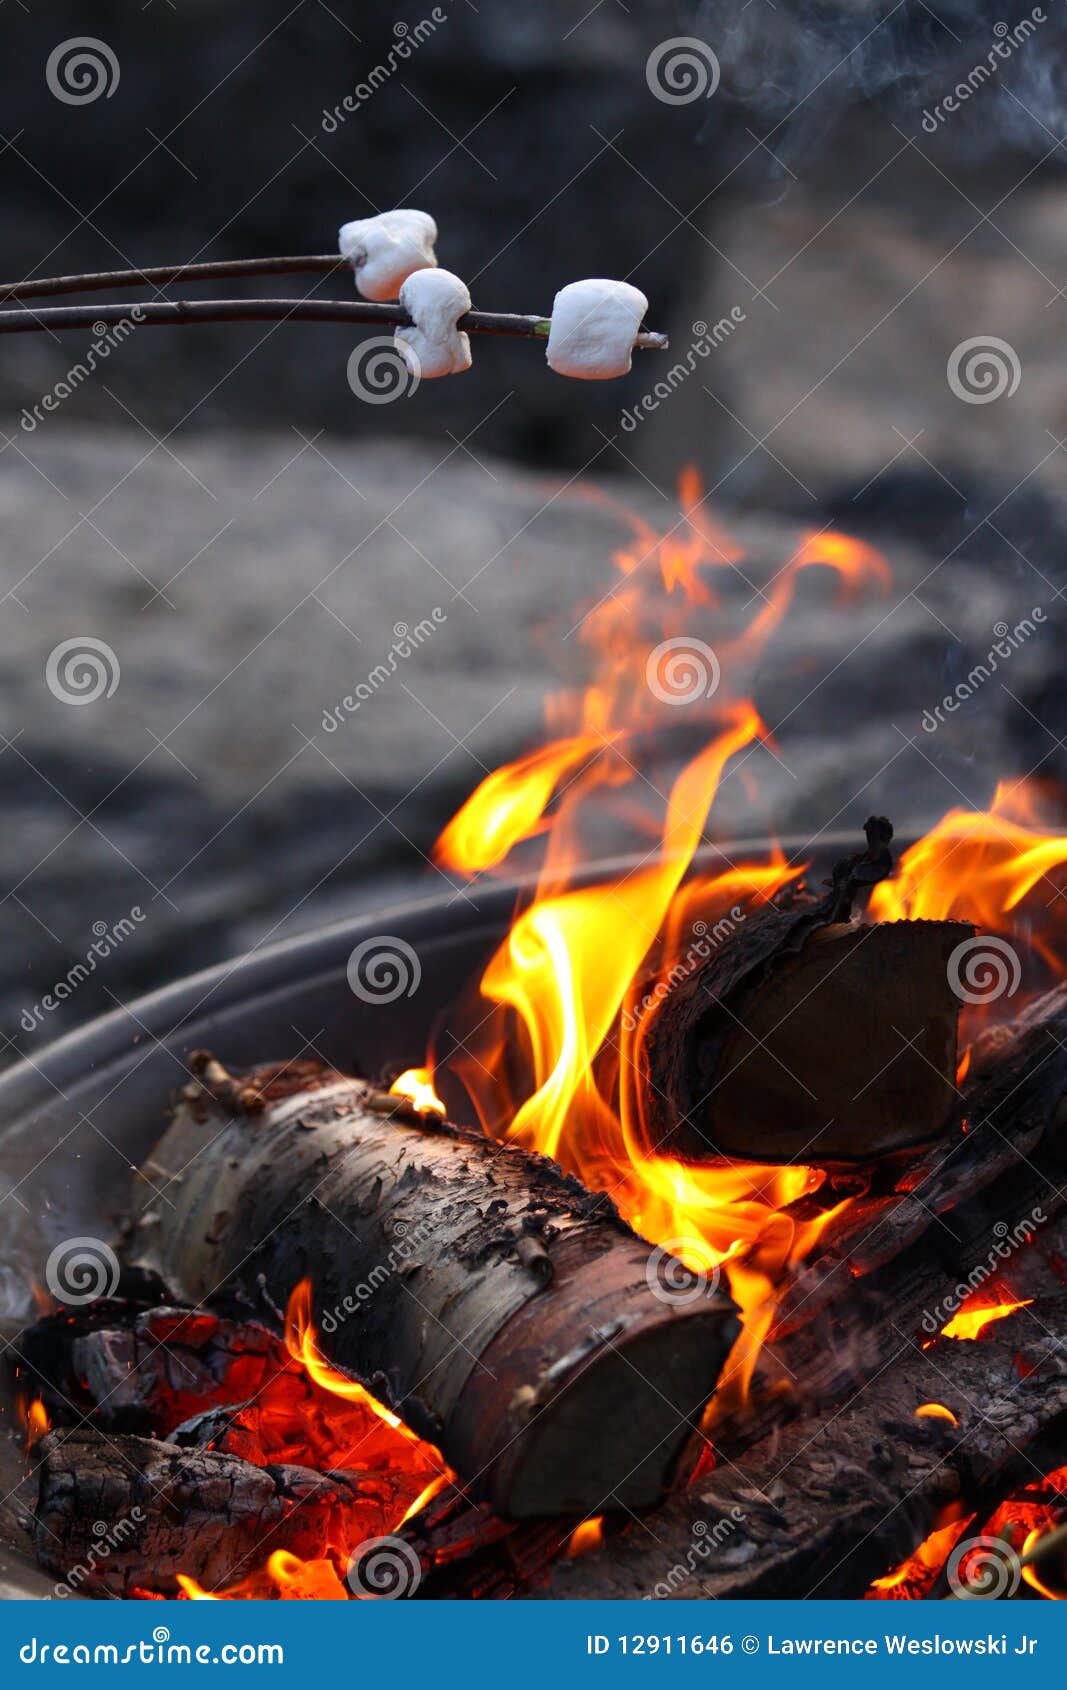 roasting marshmellows over a fire